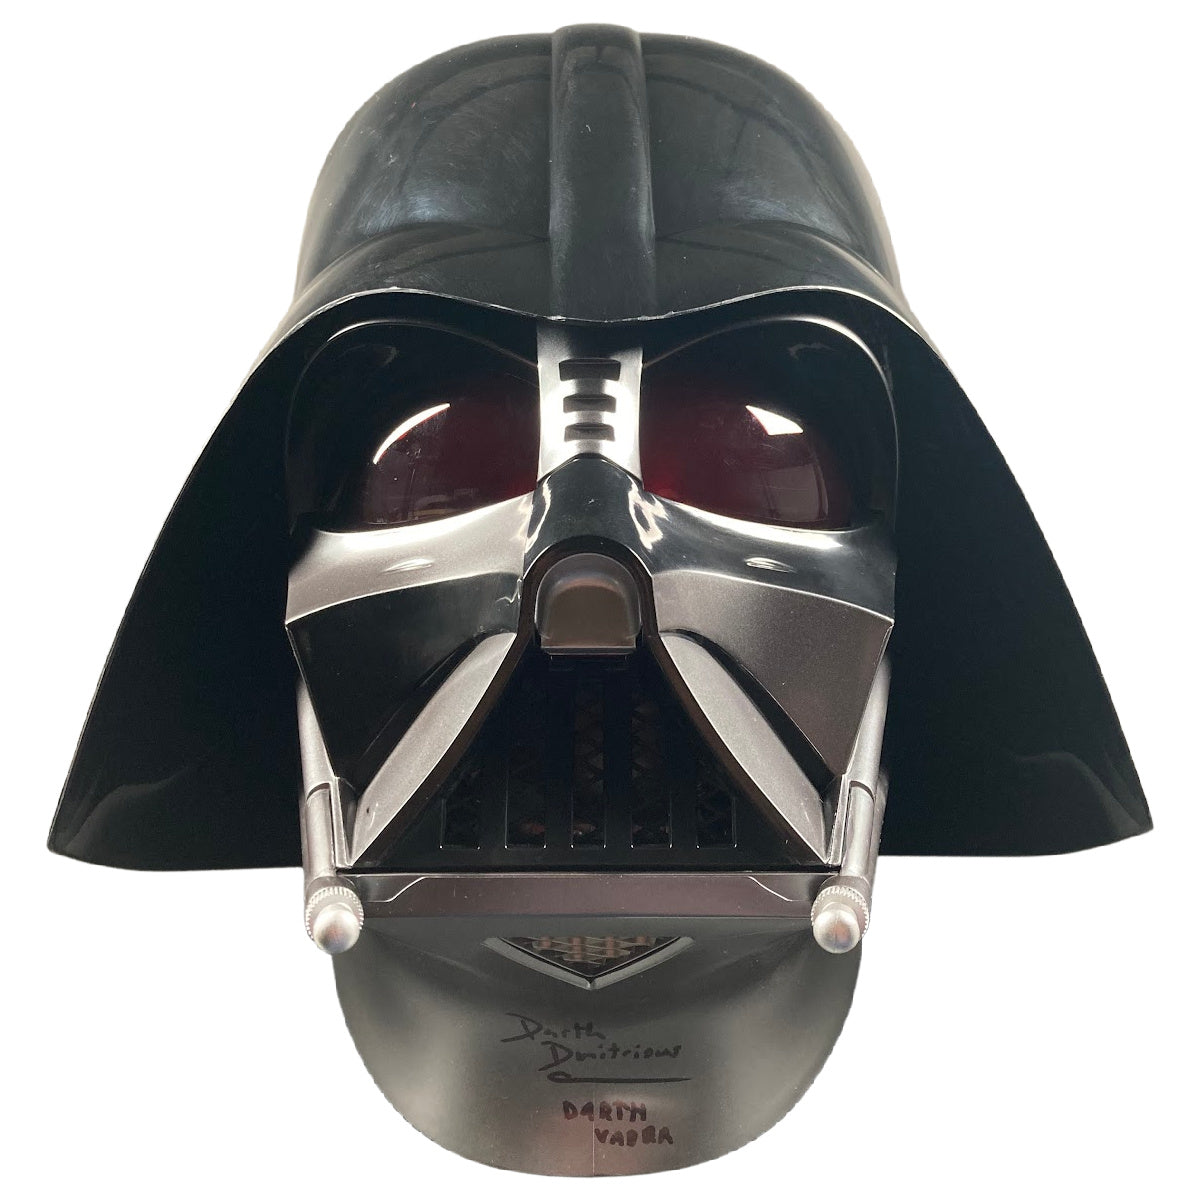 Dmitrious Bistrevsky Signed Star Wars Black Series Darth Vader Helmet Prop  Replica JSA